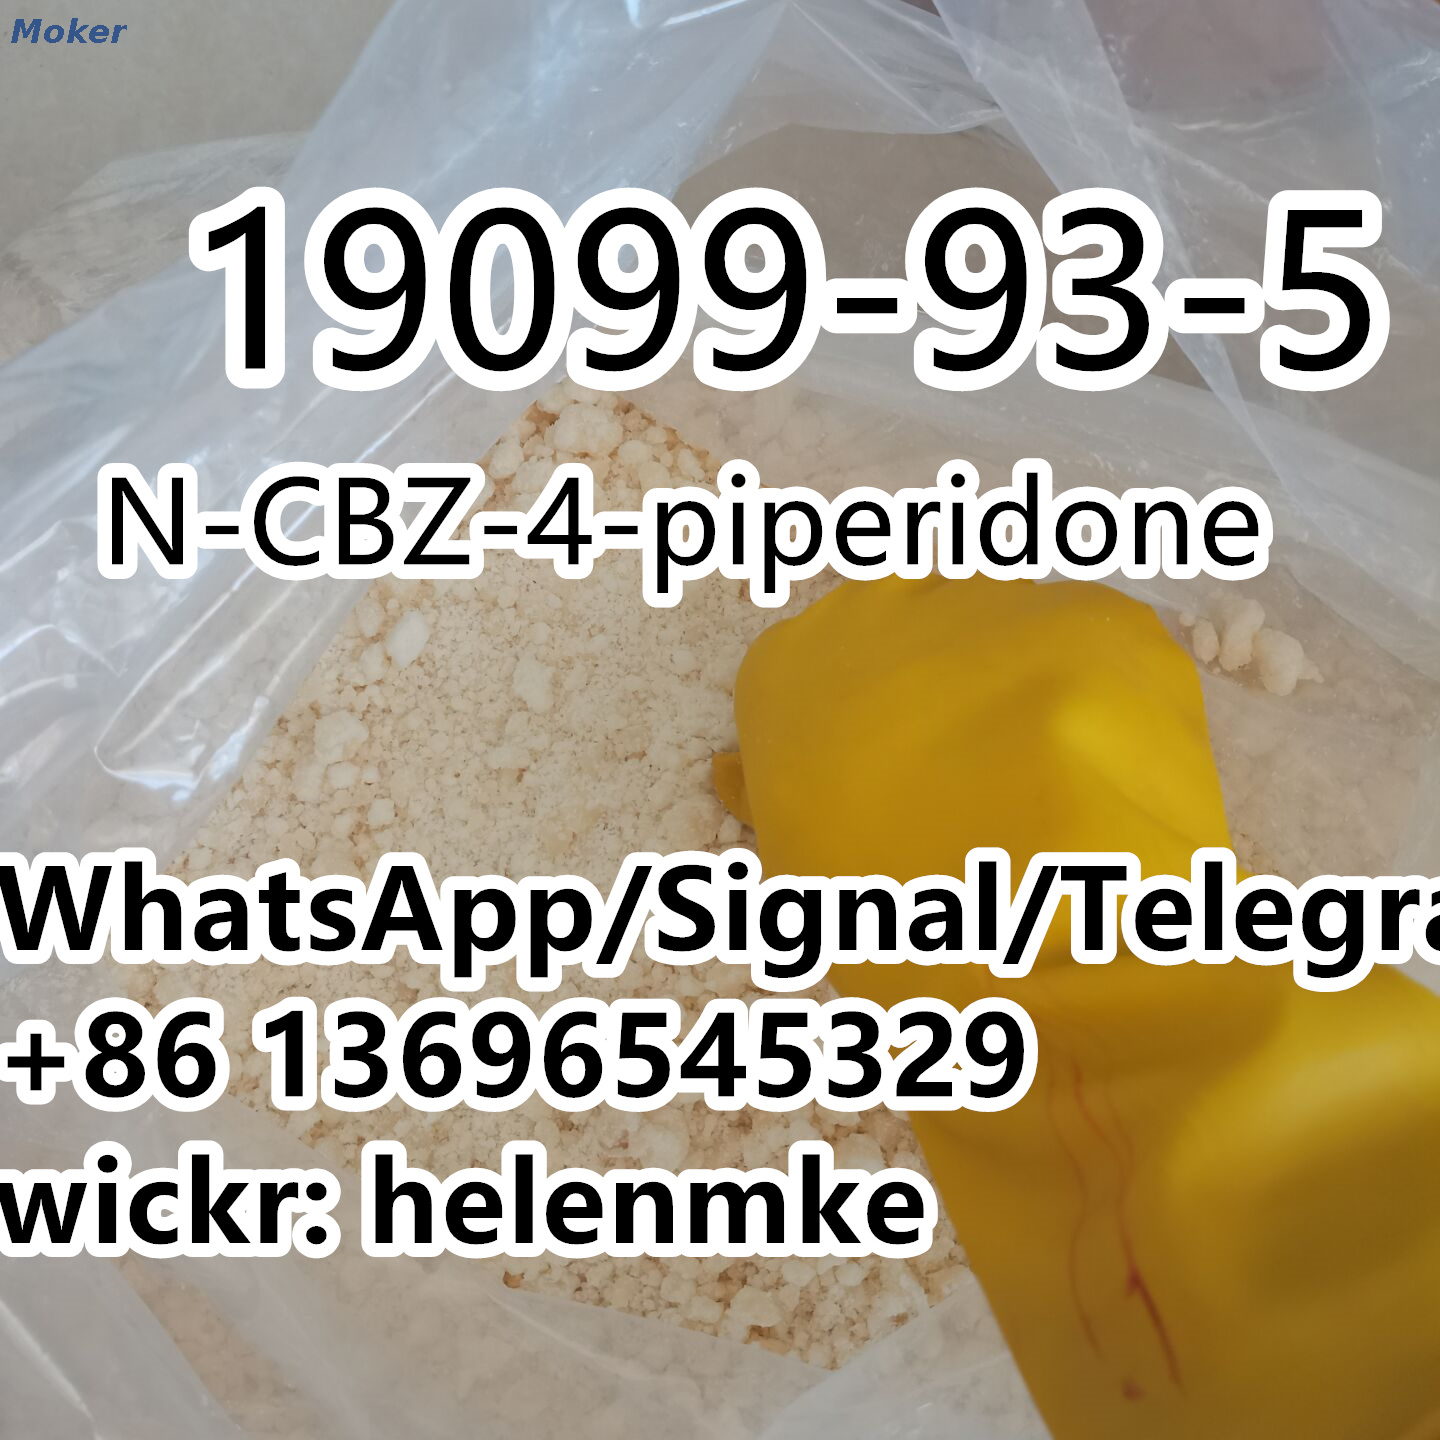 Organic N-CBZ-4-piperidone CAS 19099-93-5